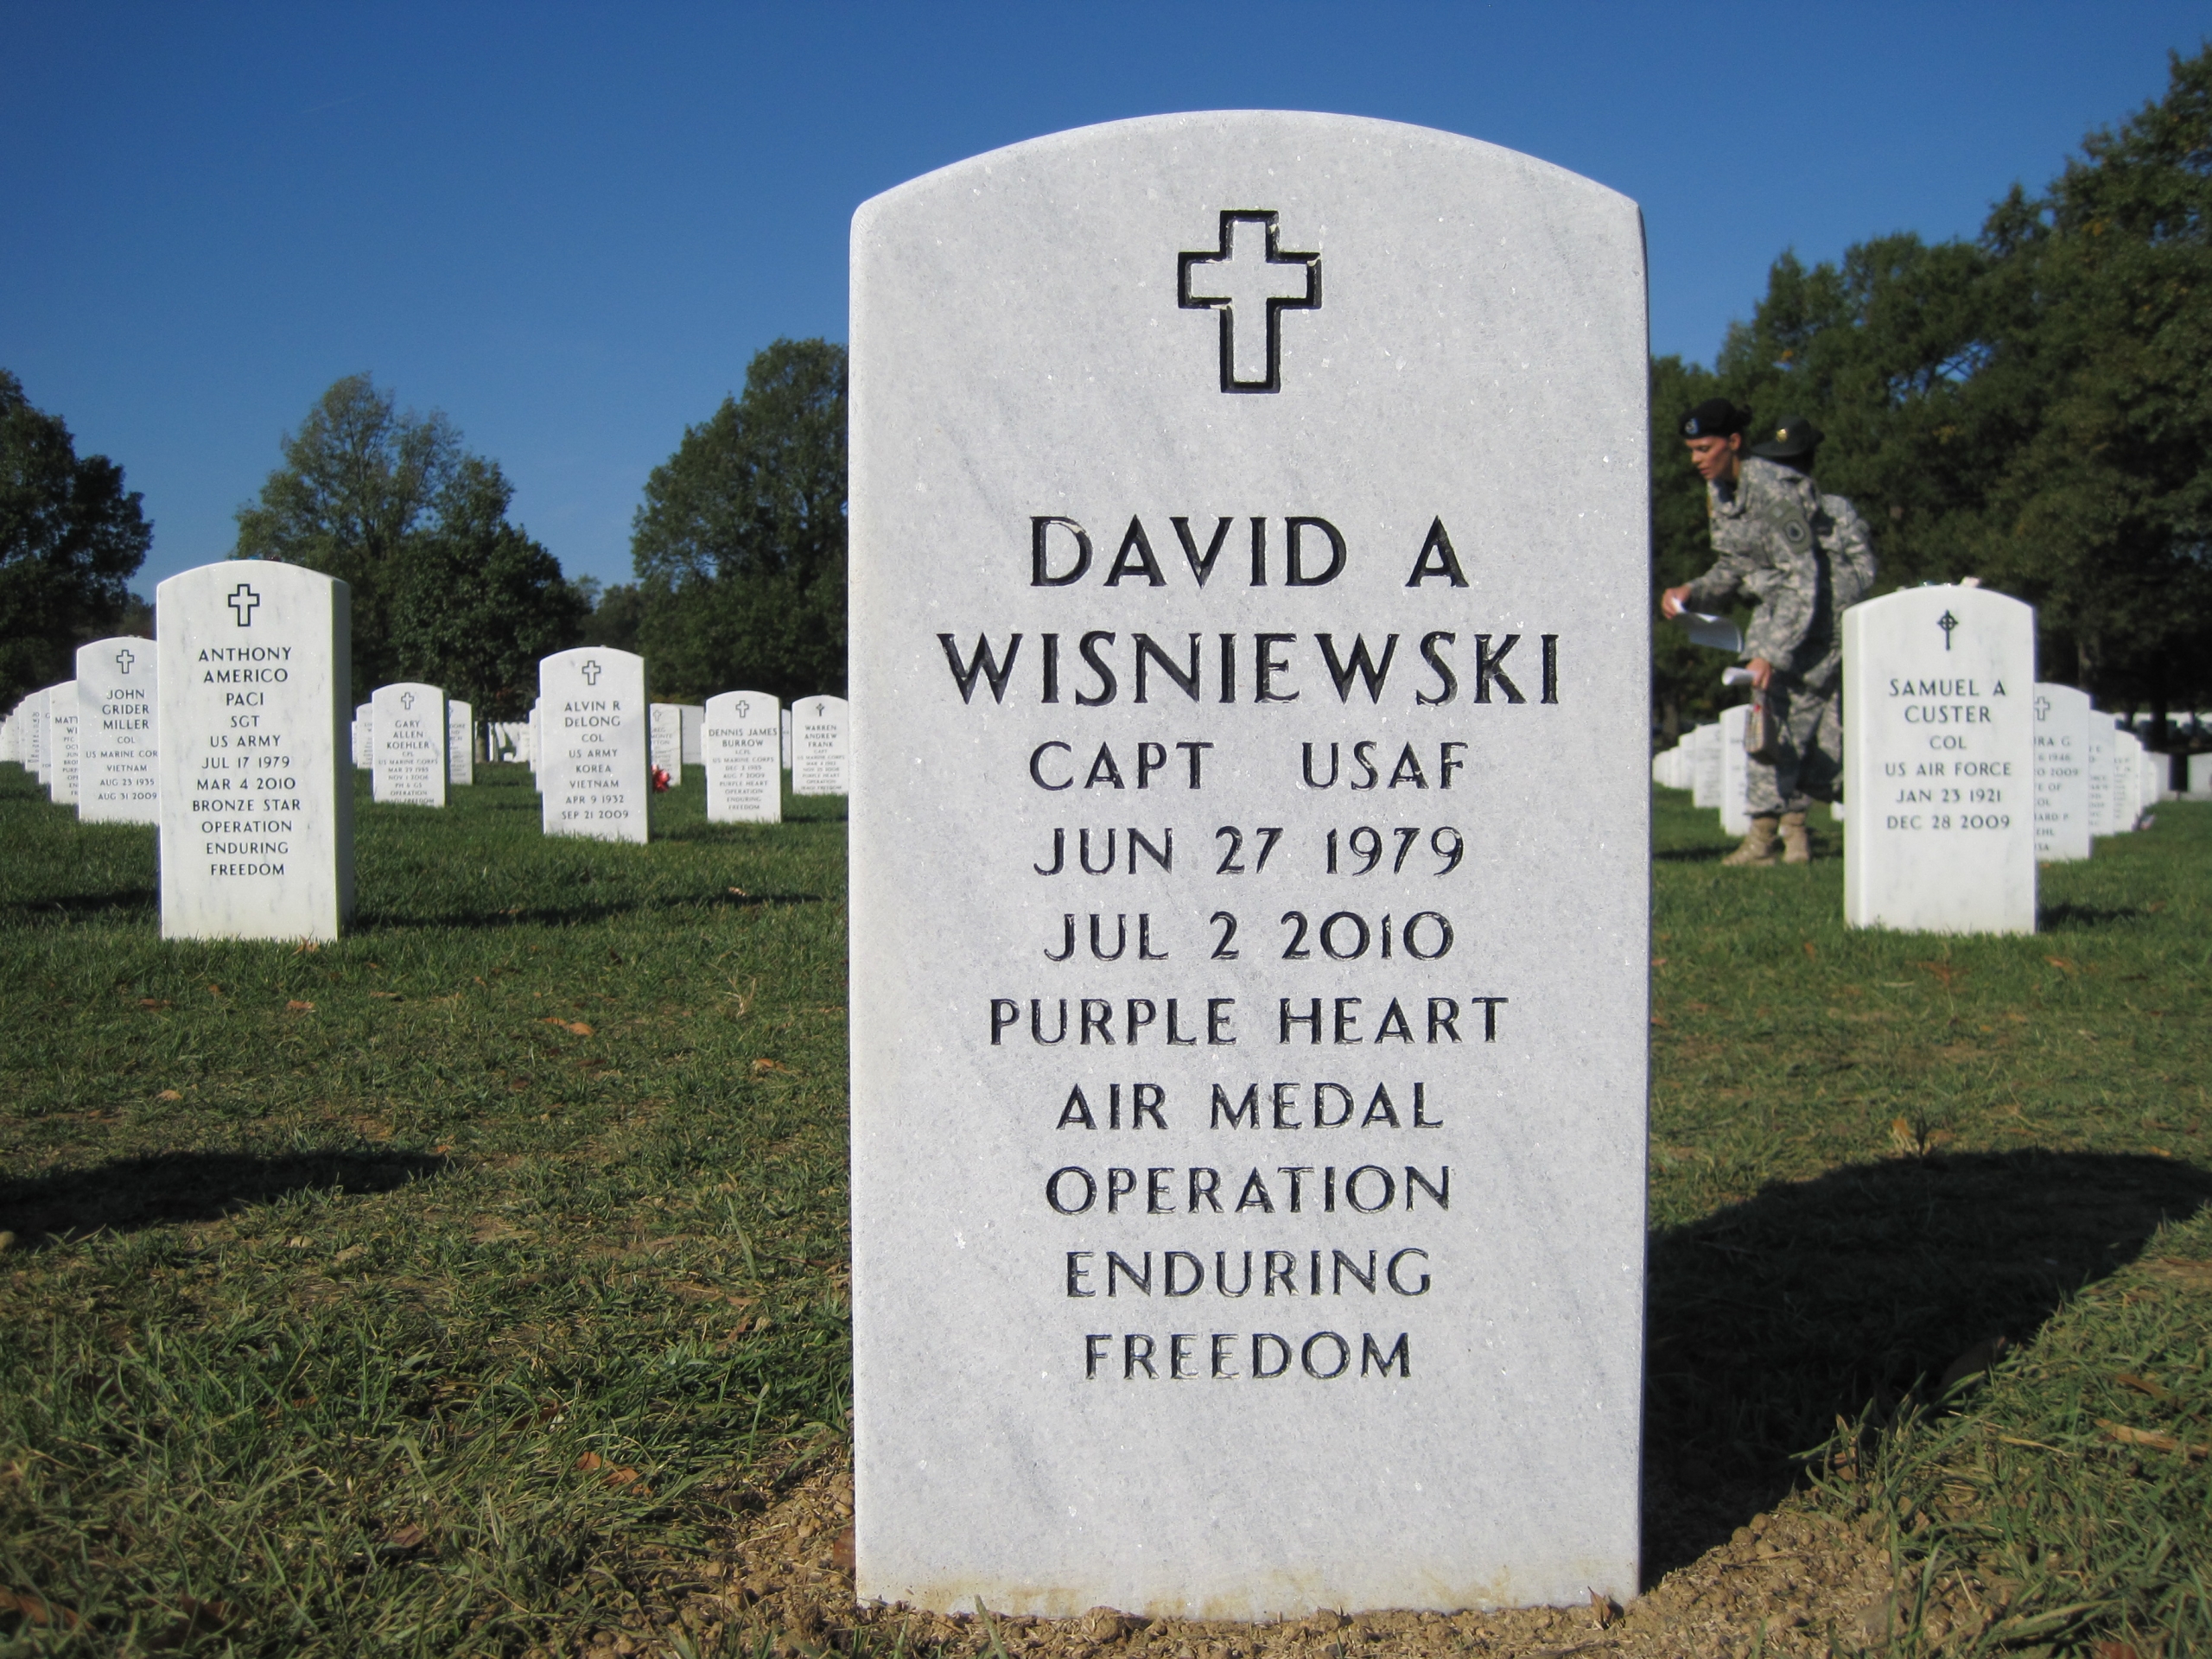 dawisniewski-gravesite-photo-by-eileen-horan-november-2010-001